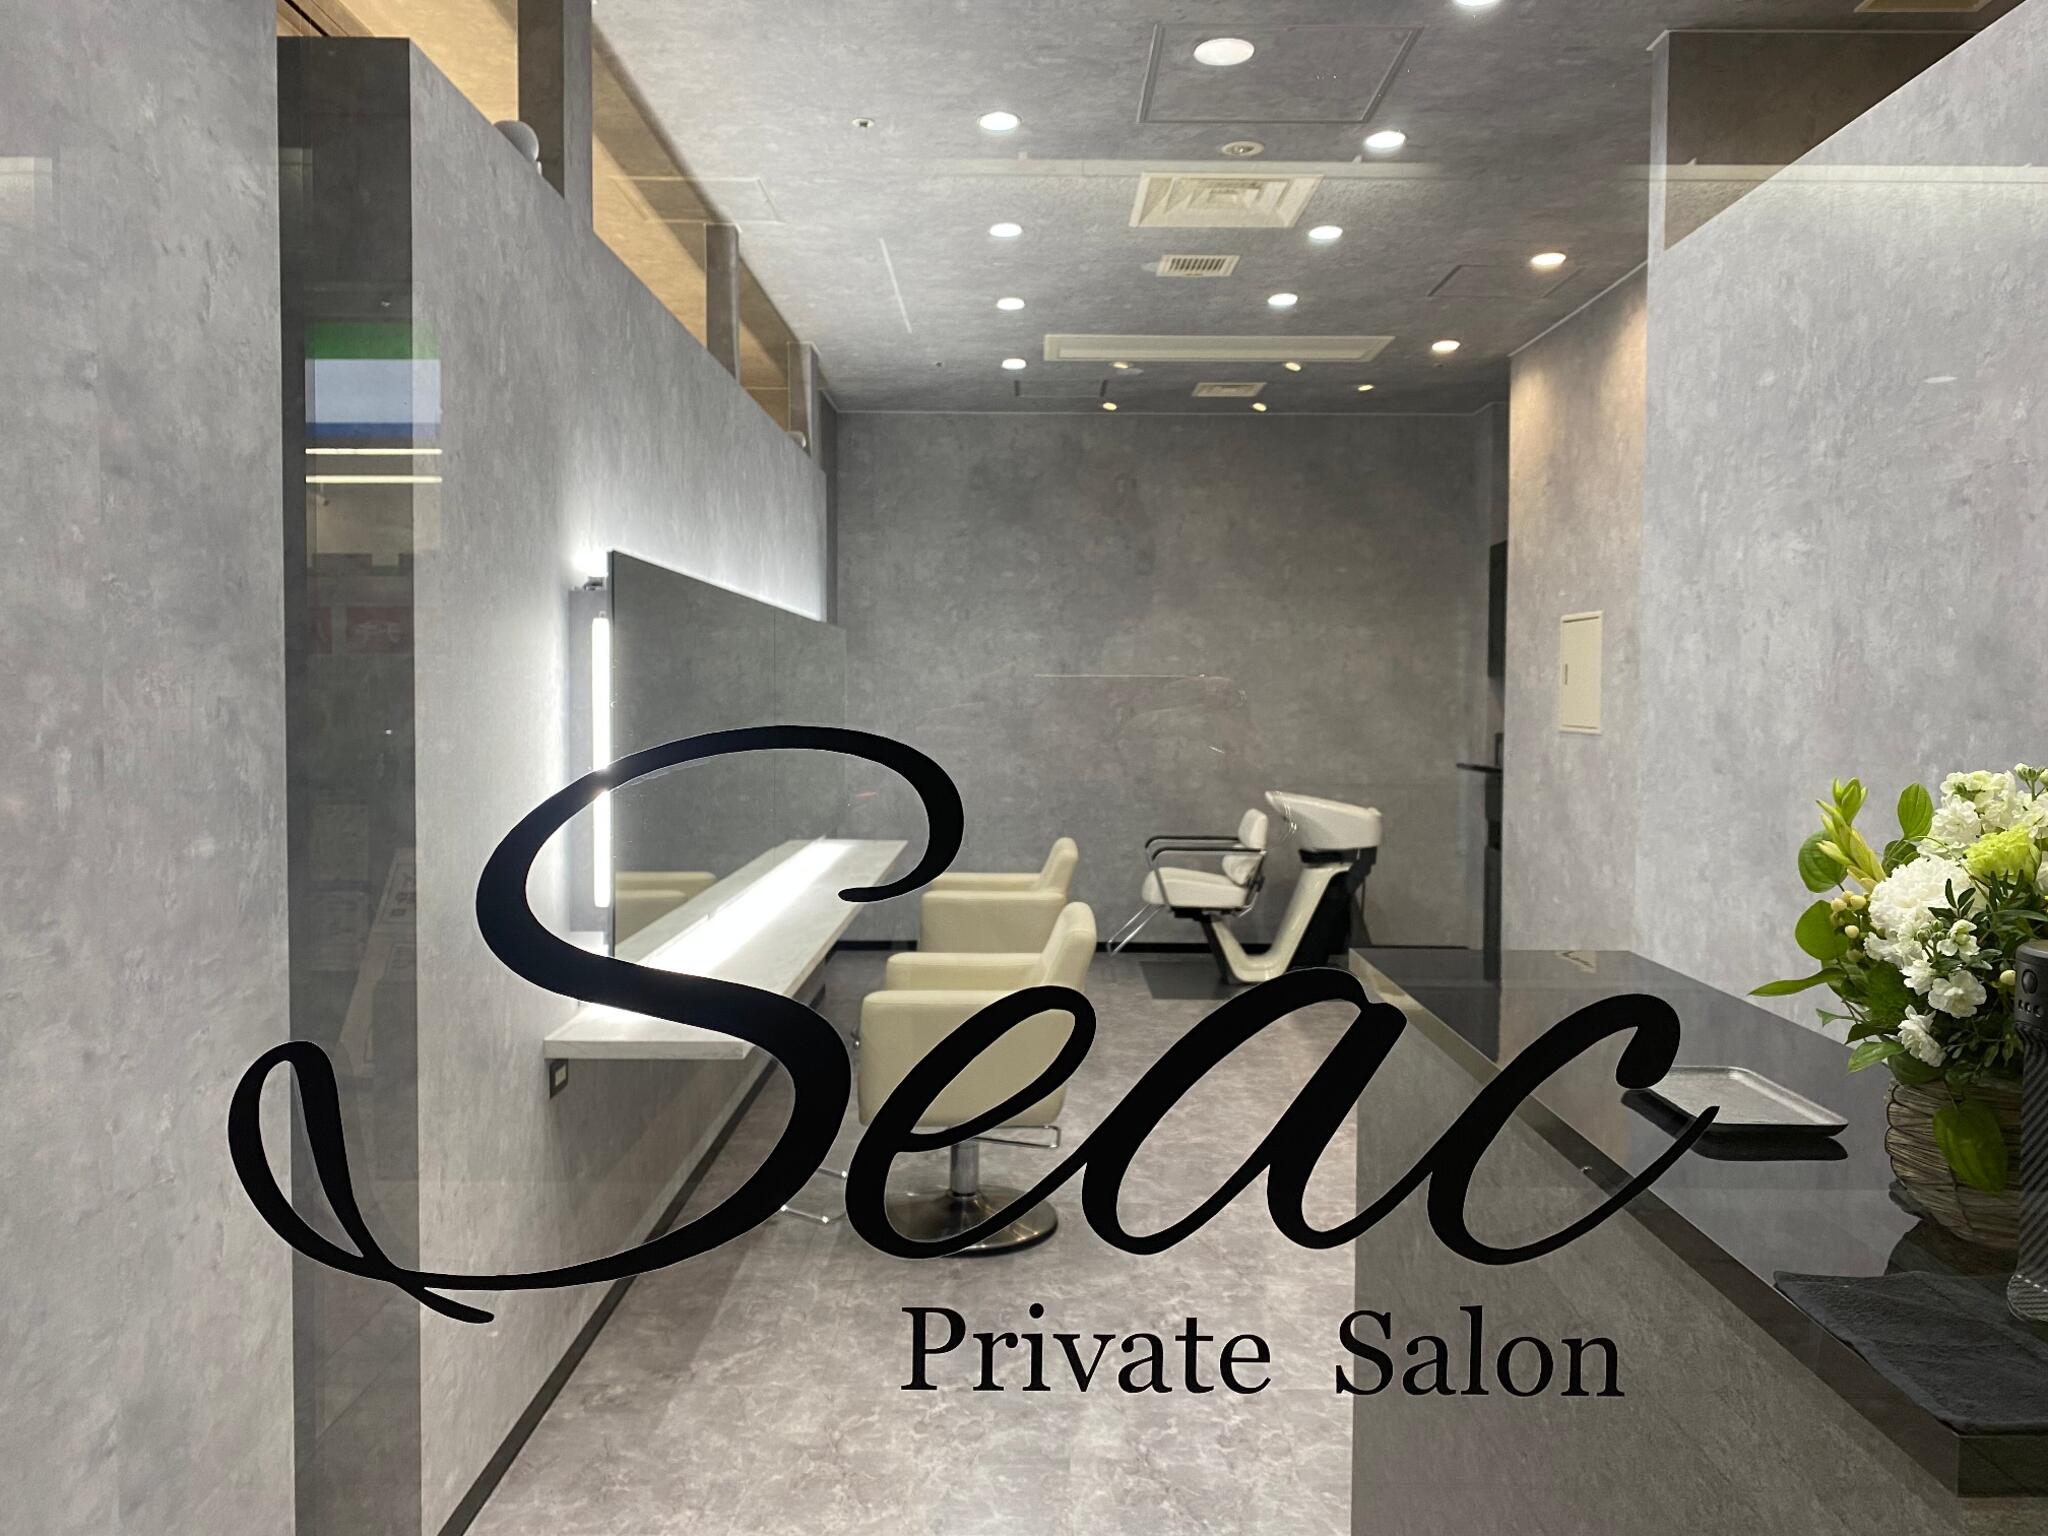 Seac Private Salonの代表写真4